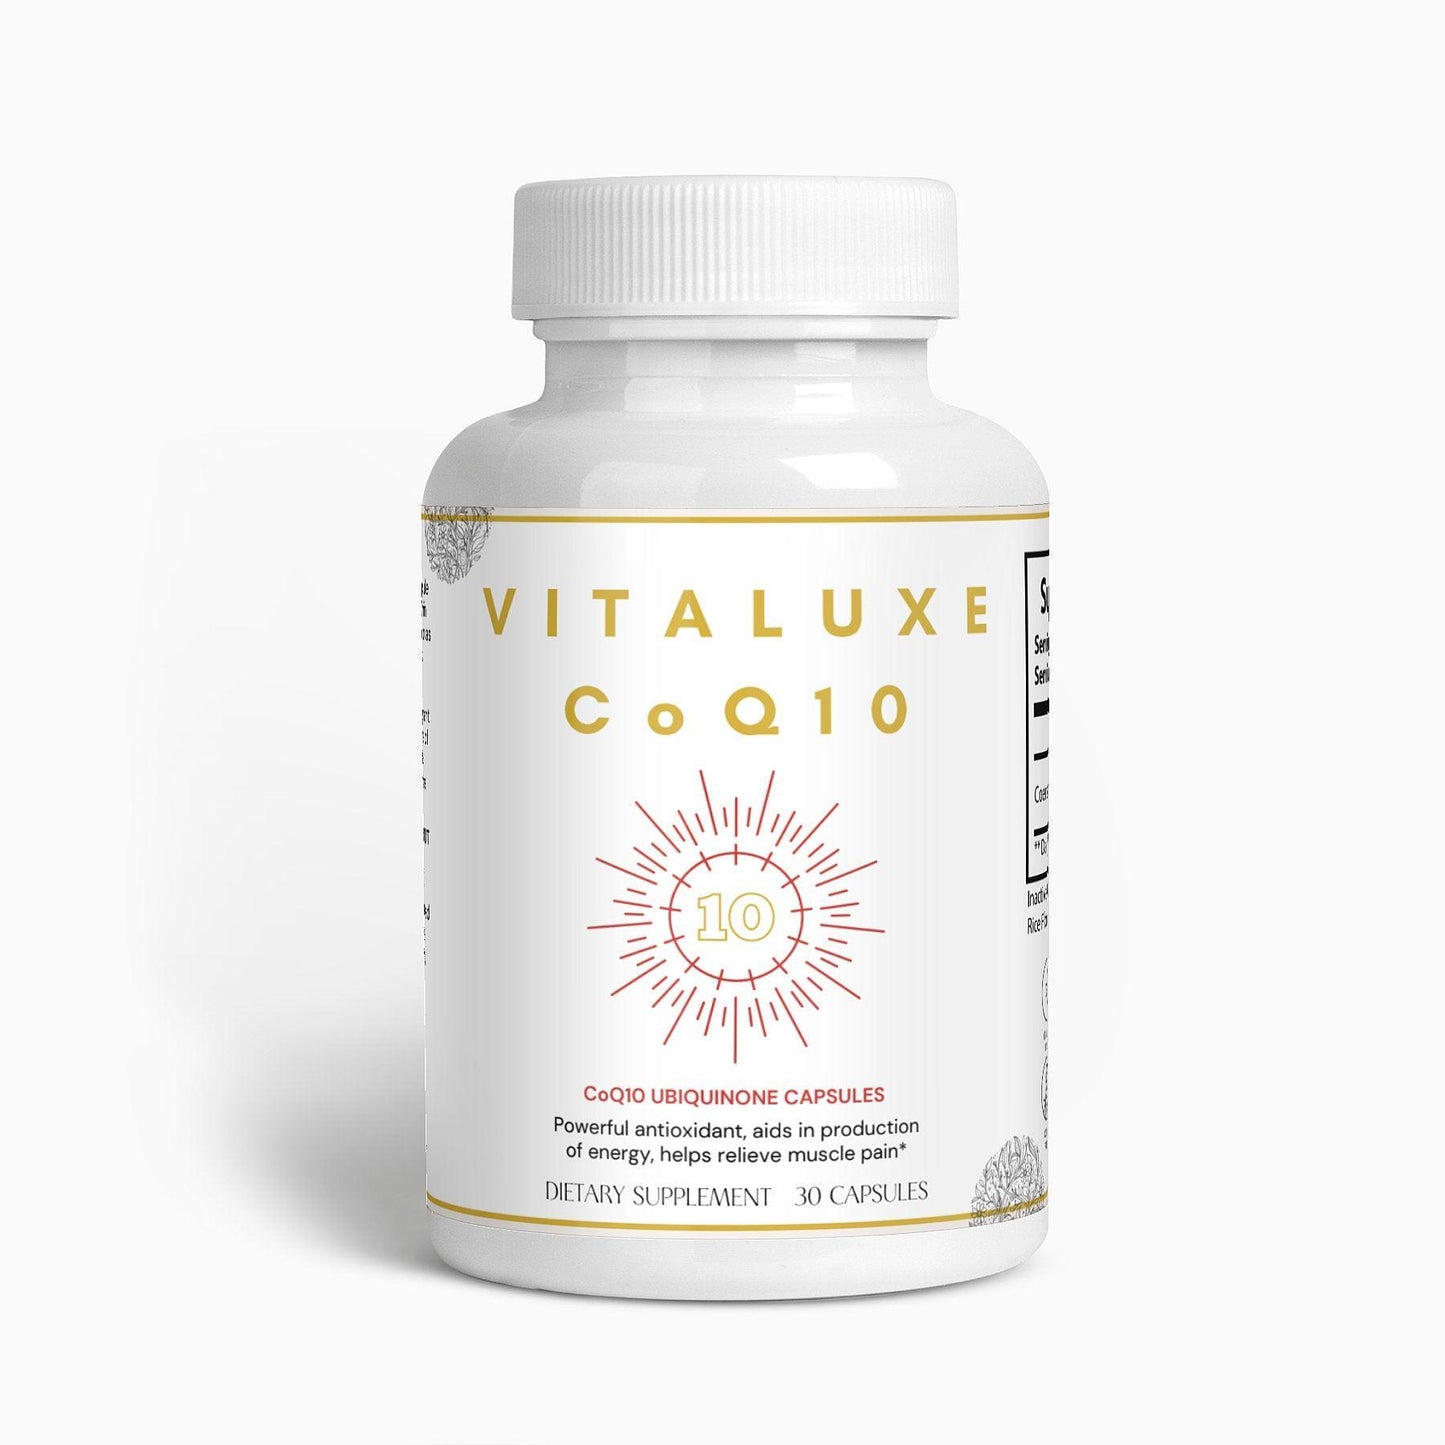 VITALUXE CoQ10 - detoks.ca